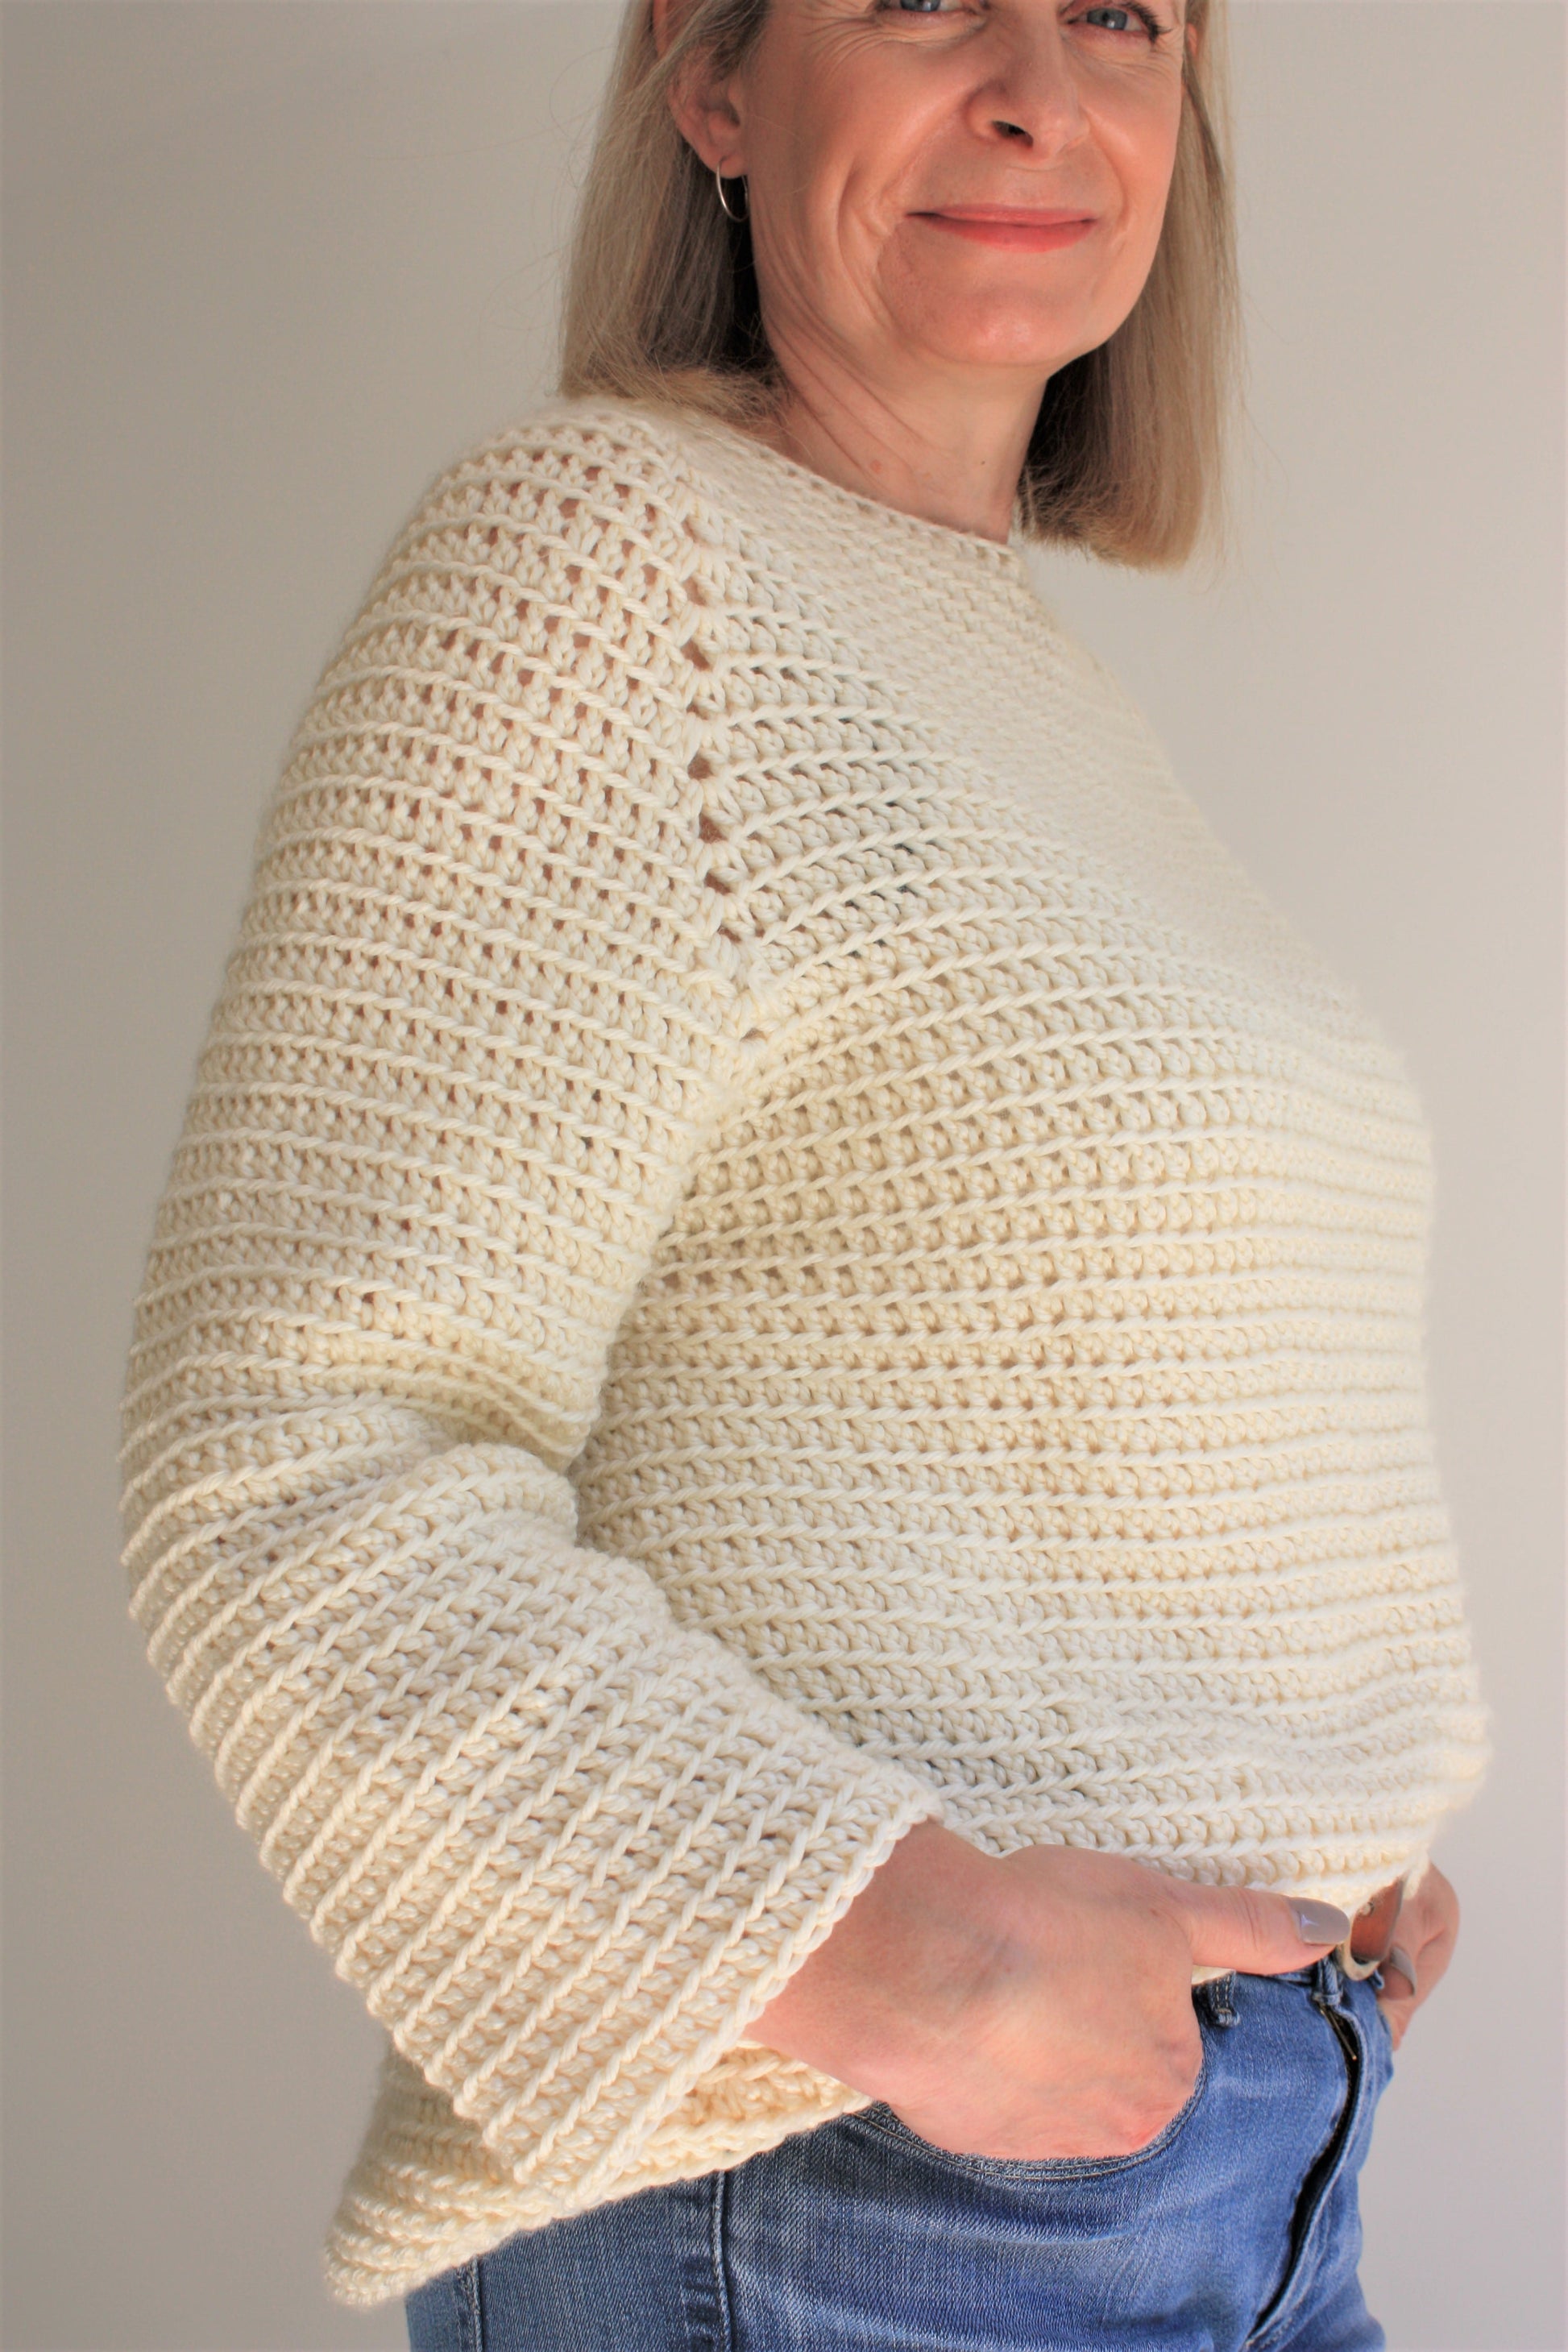 Oversized Sweater Crochet Tutorial